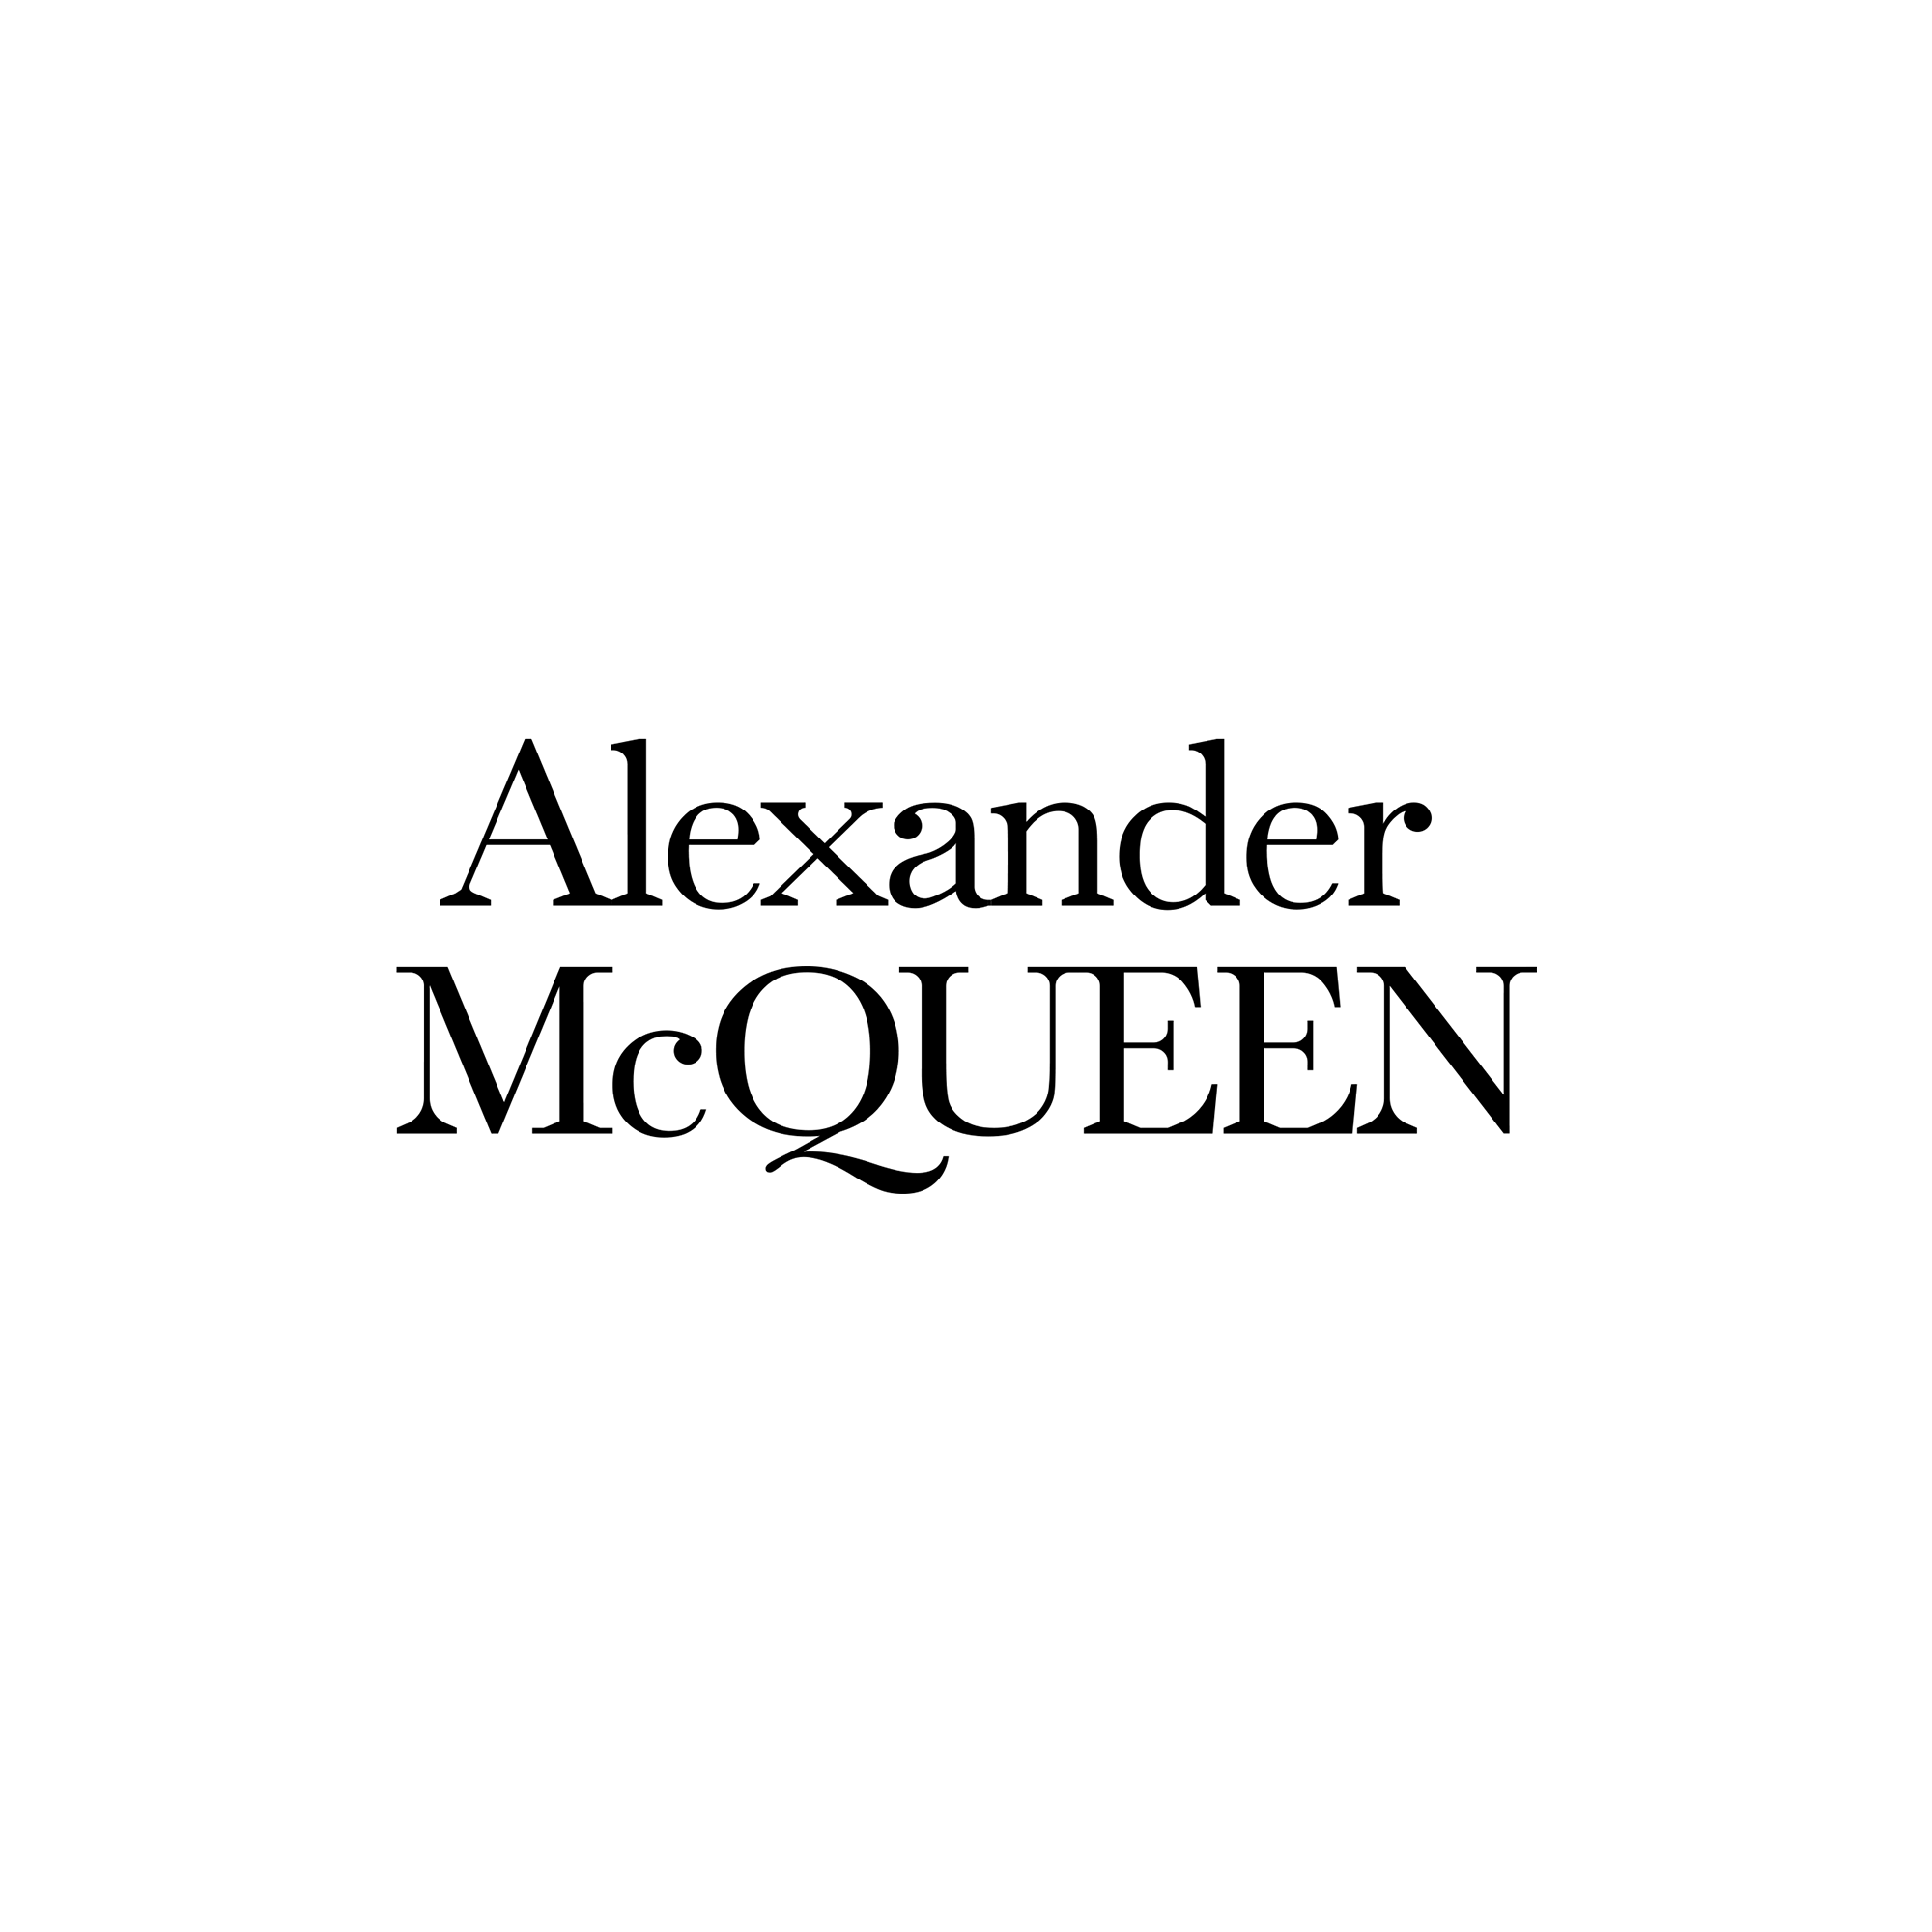 Alexander McQueen Dallas store opening. Photo courtesy of Alexander McQueen